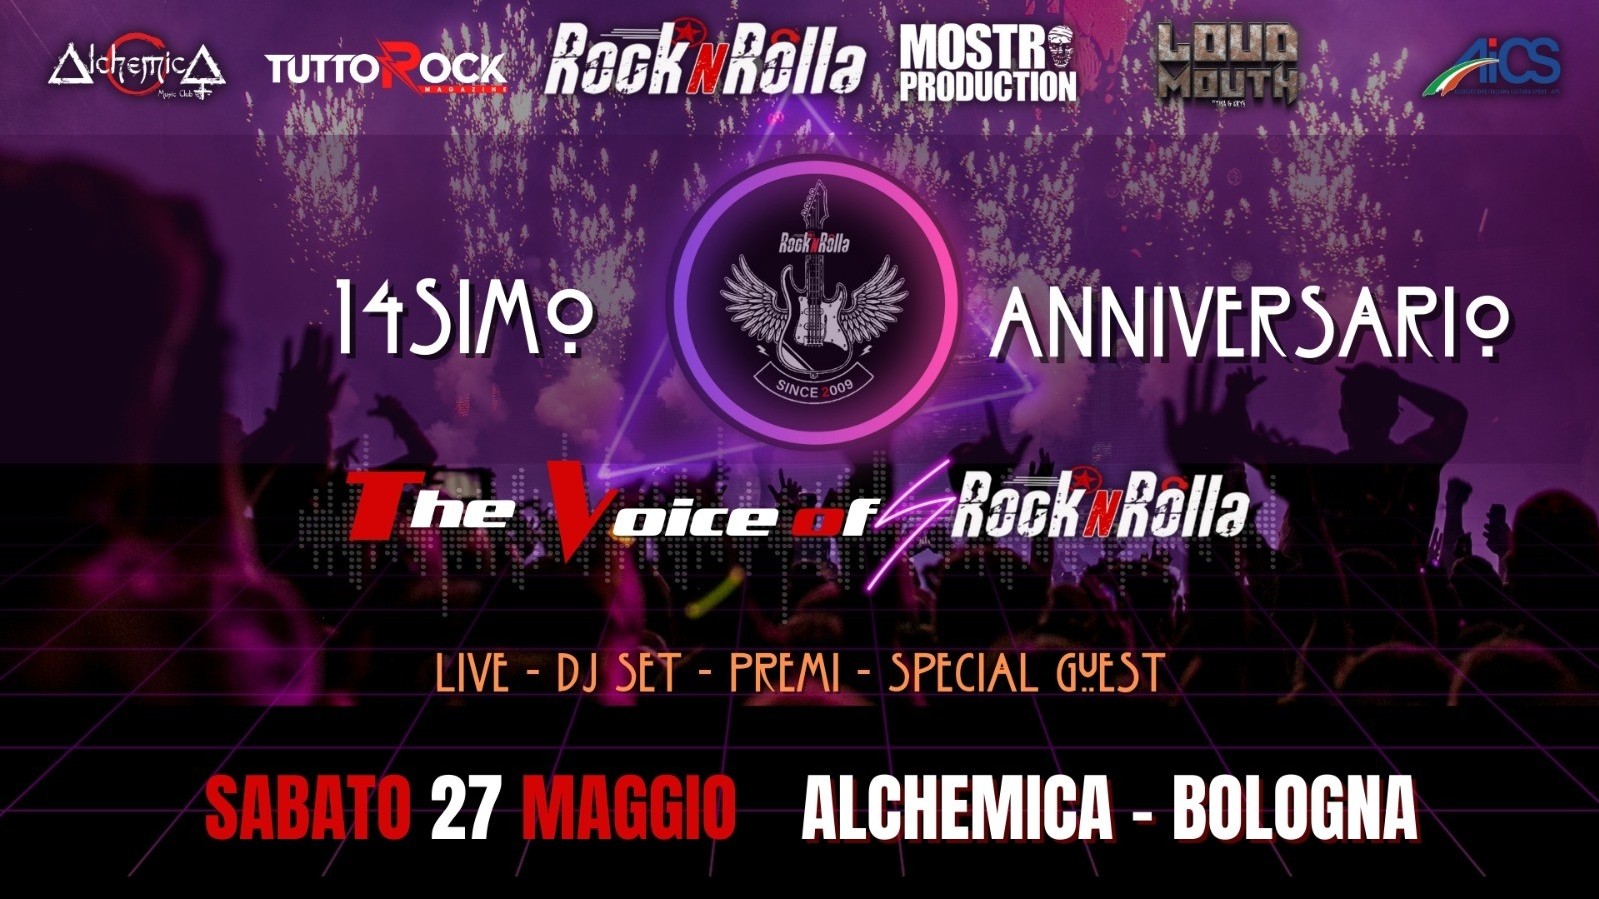 Rocknrolla 14° Anniversario - The Voice of Rocknrolla / Special Guest/ Dj Set and more...